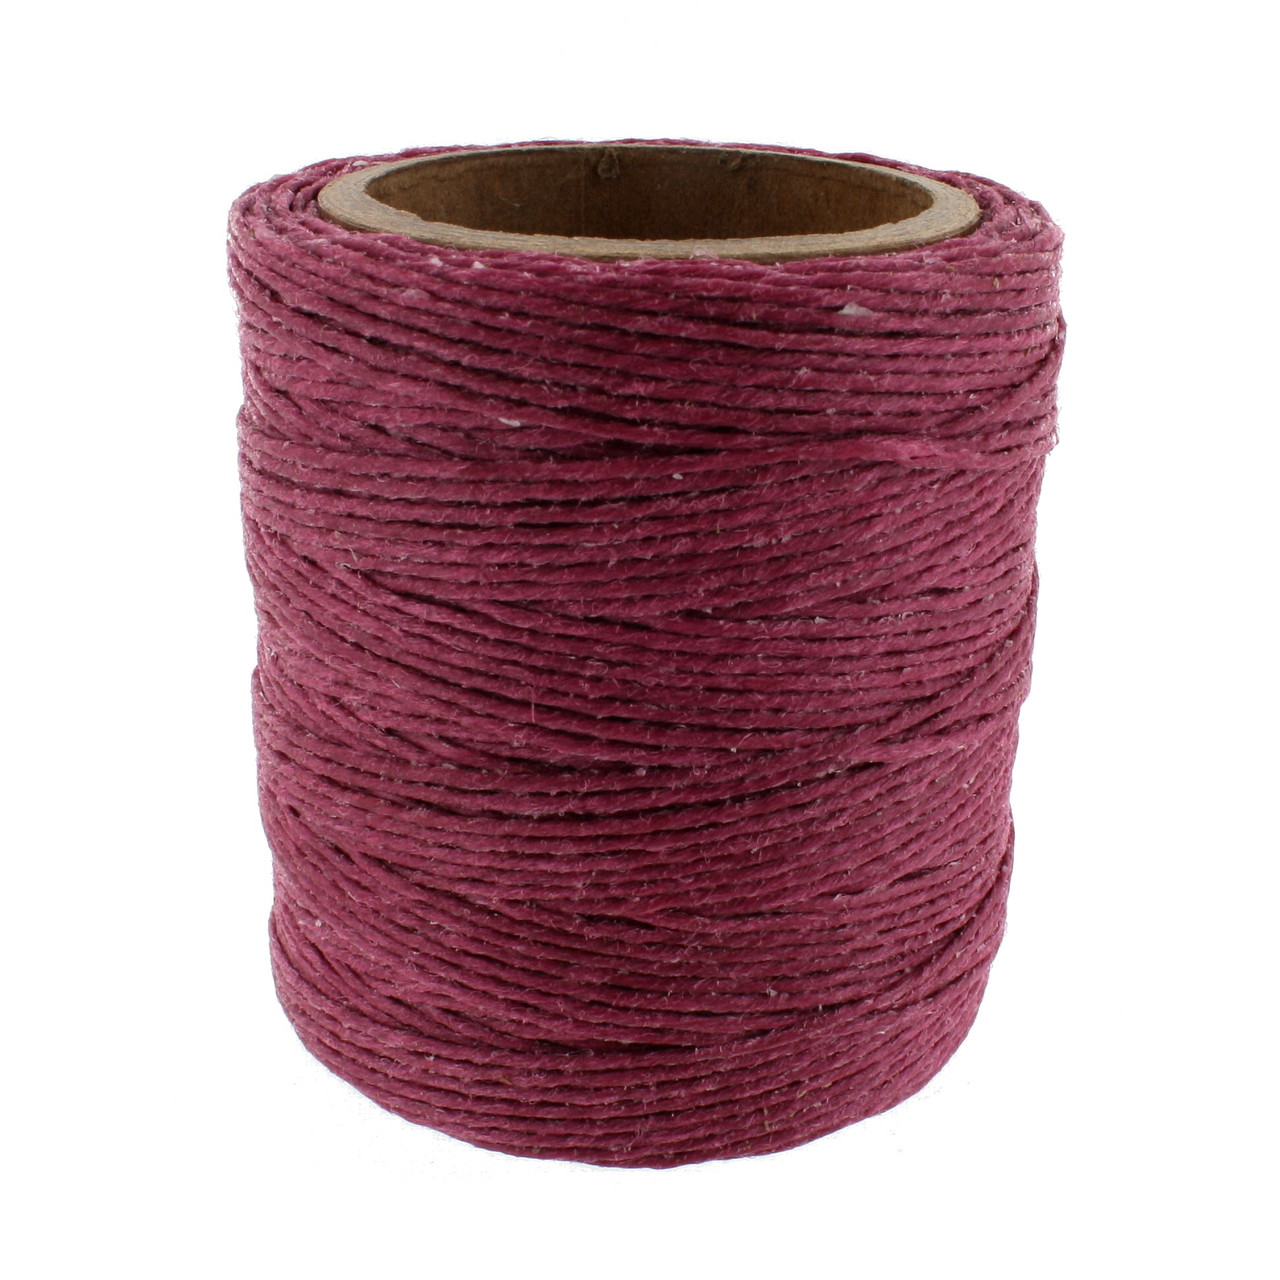 Maine Thread, Twisted Waxed Cord, 70 yard spool, Raspberry - Buckleguy.com